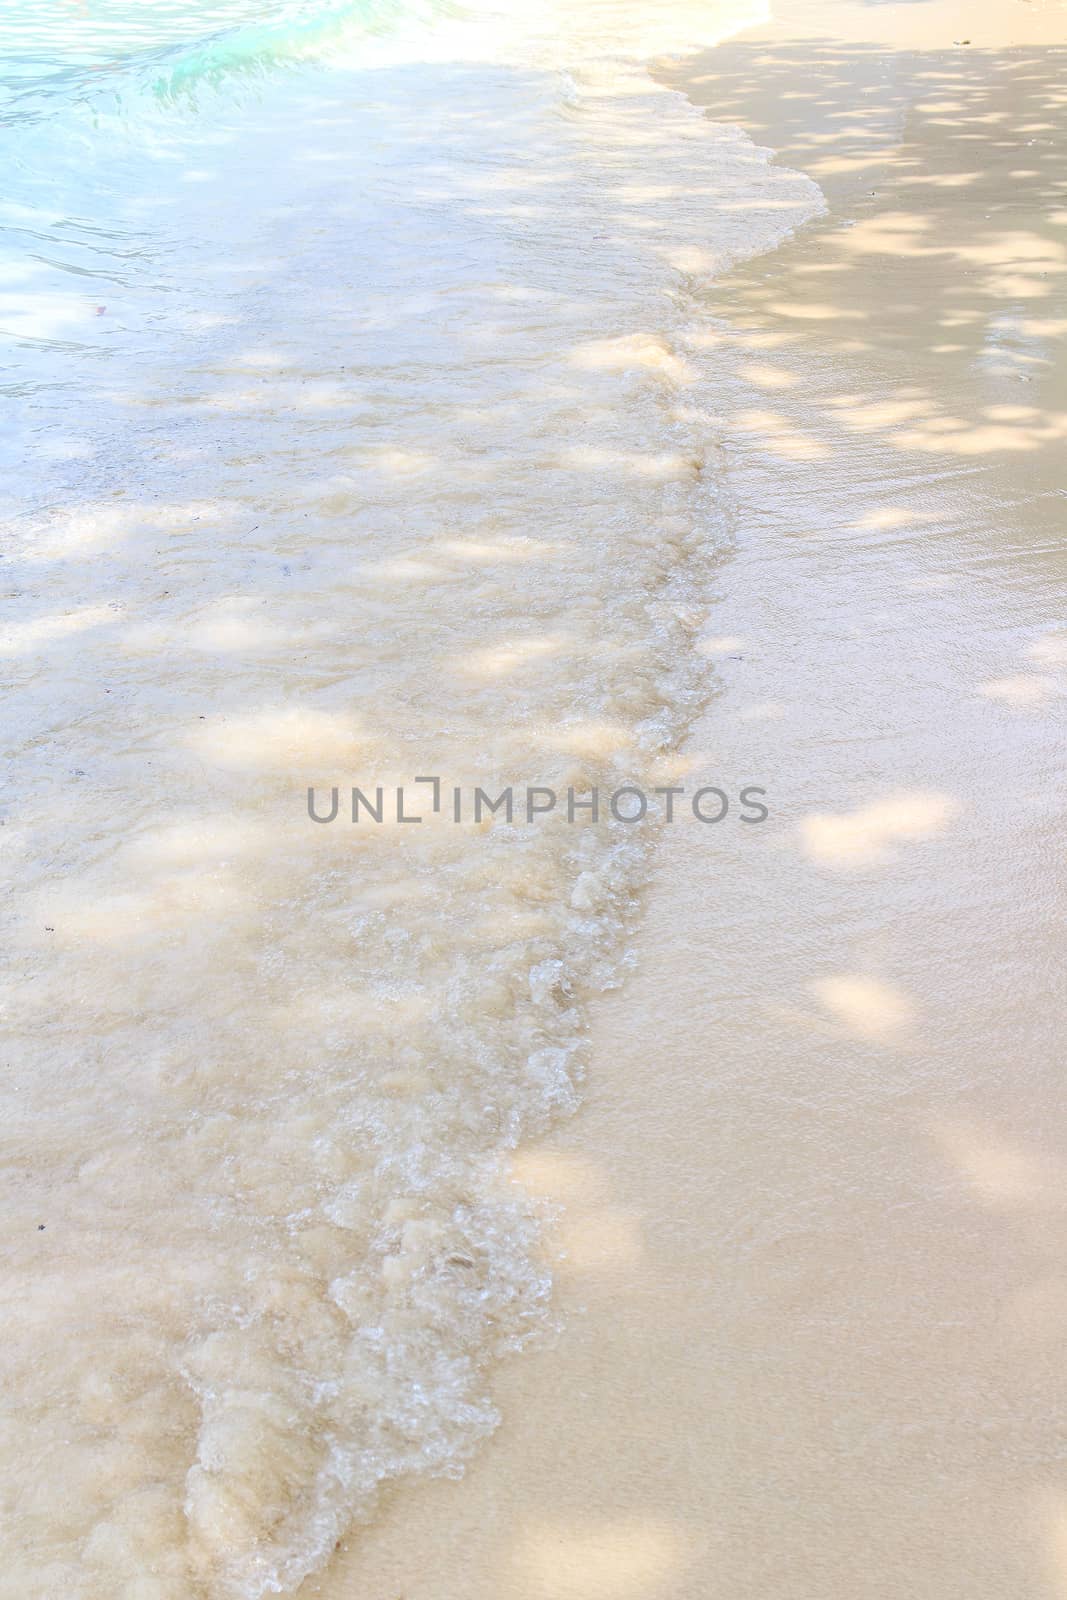 Waves on the beach by thanarat27